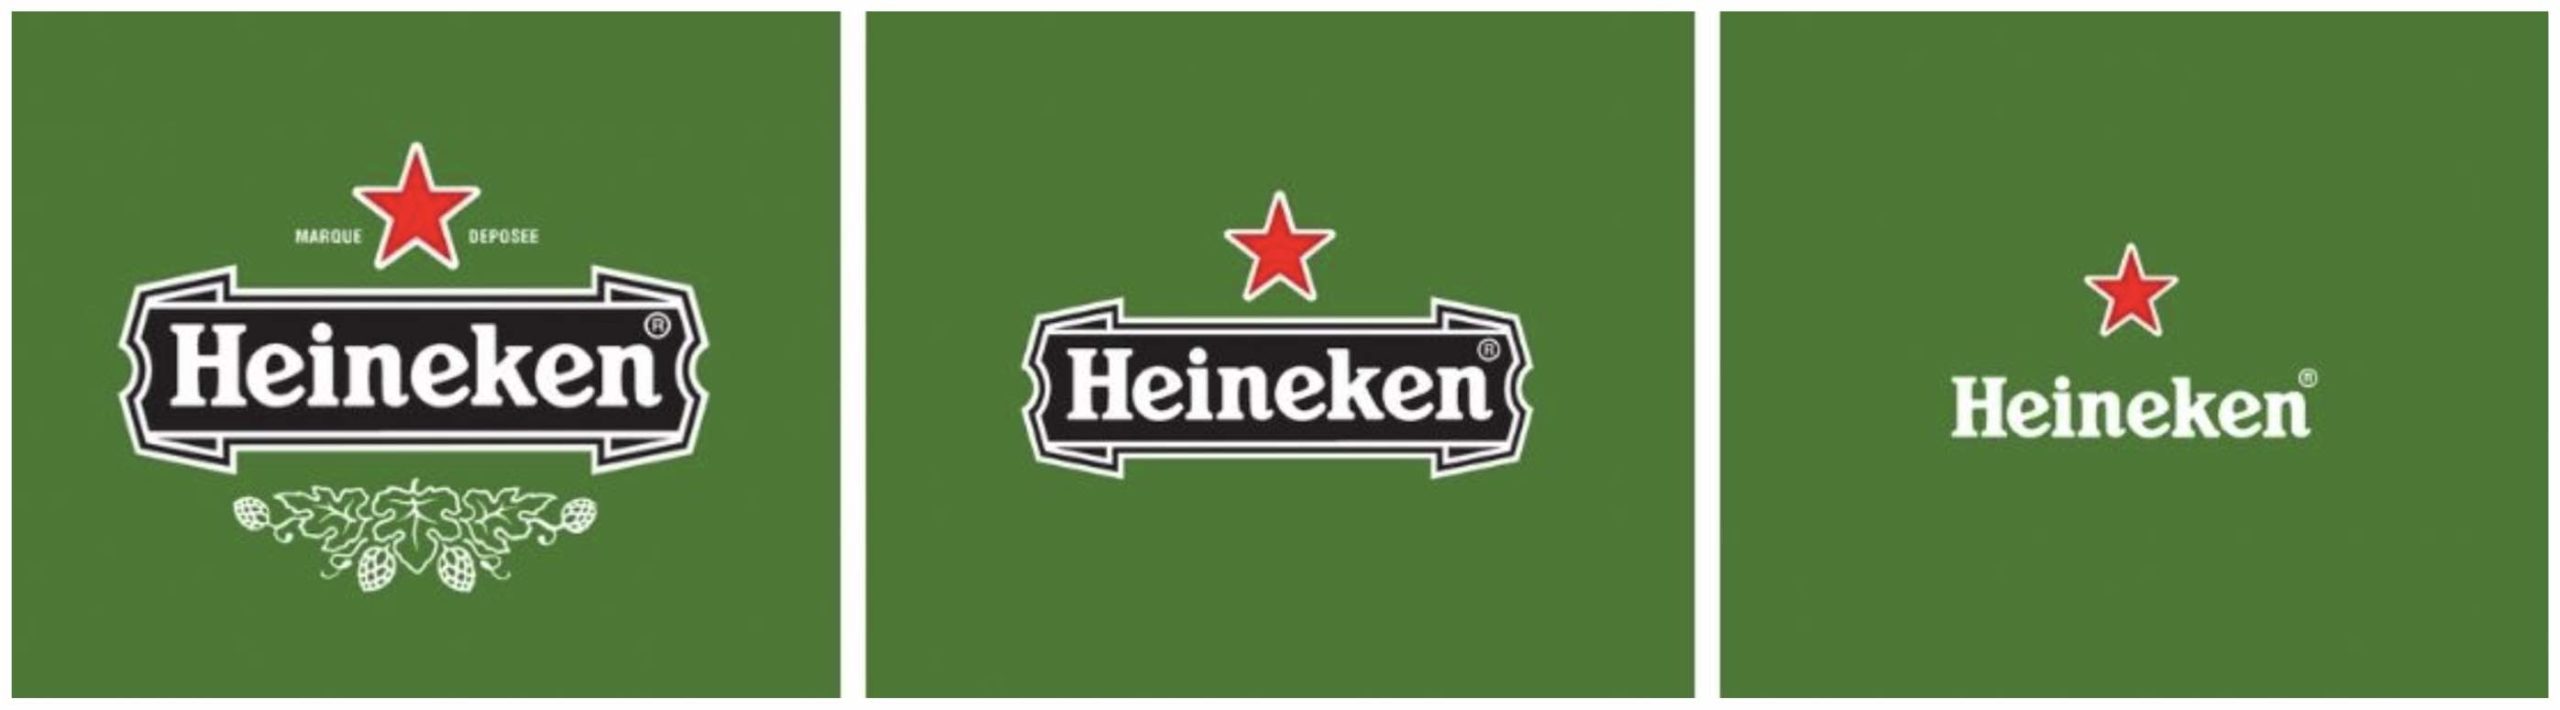 Logo variations example heineken